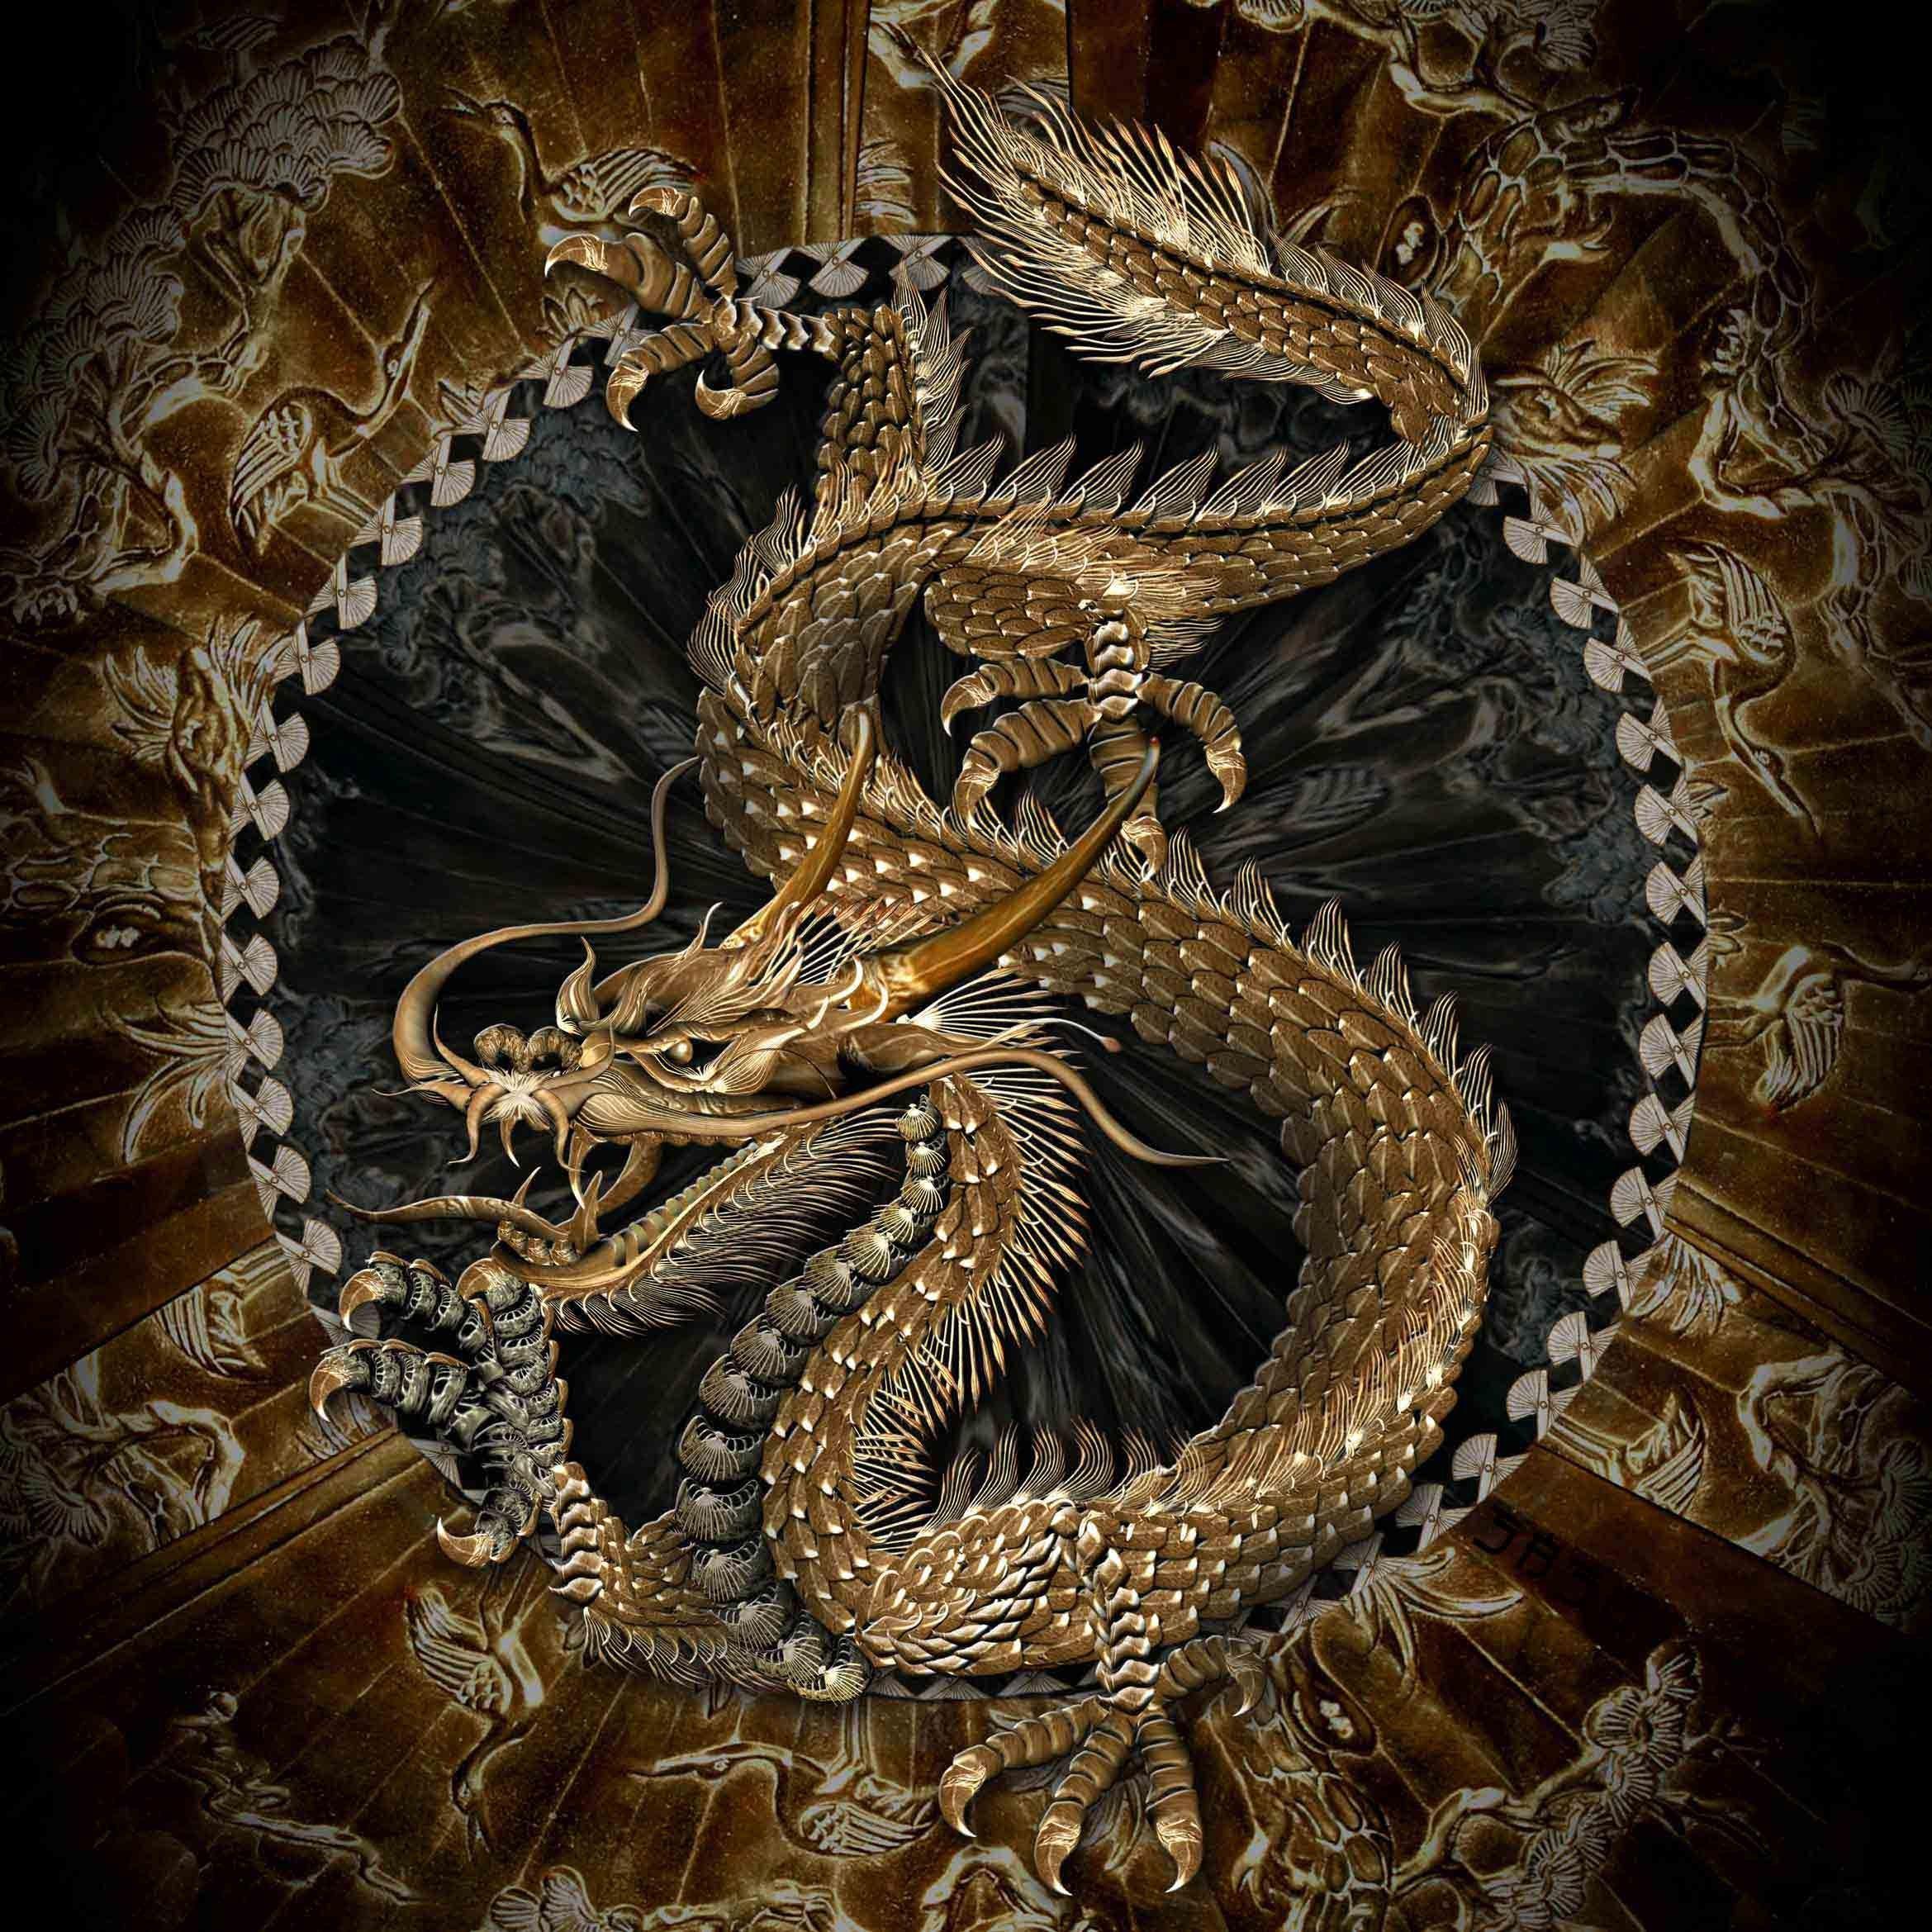 Chinese Dragon Desktop Wallpapers - Top Free Chinese Dragon Desktop ...